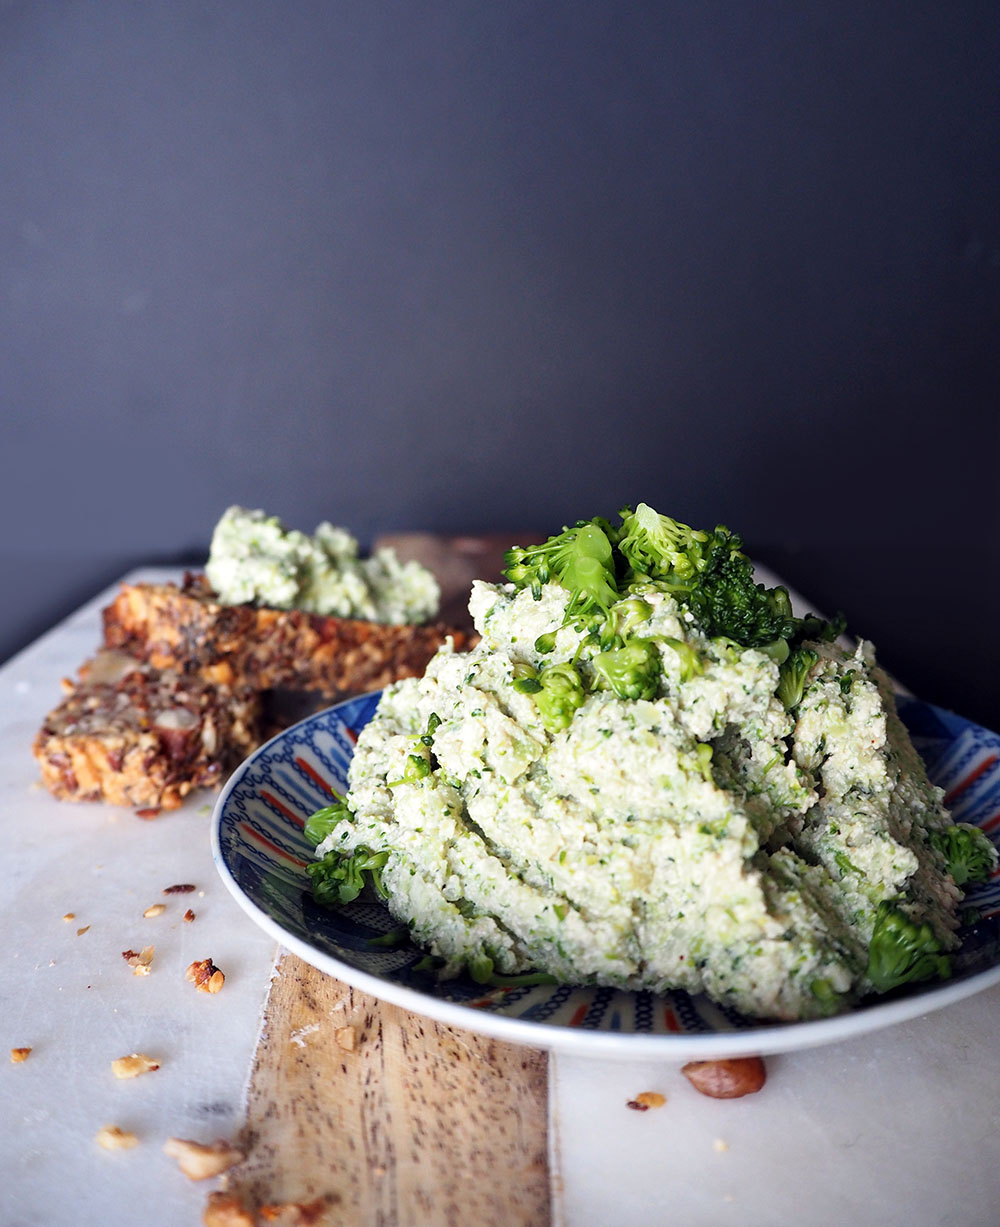 Empty the Fridge - Broccoli tofu spread